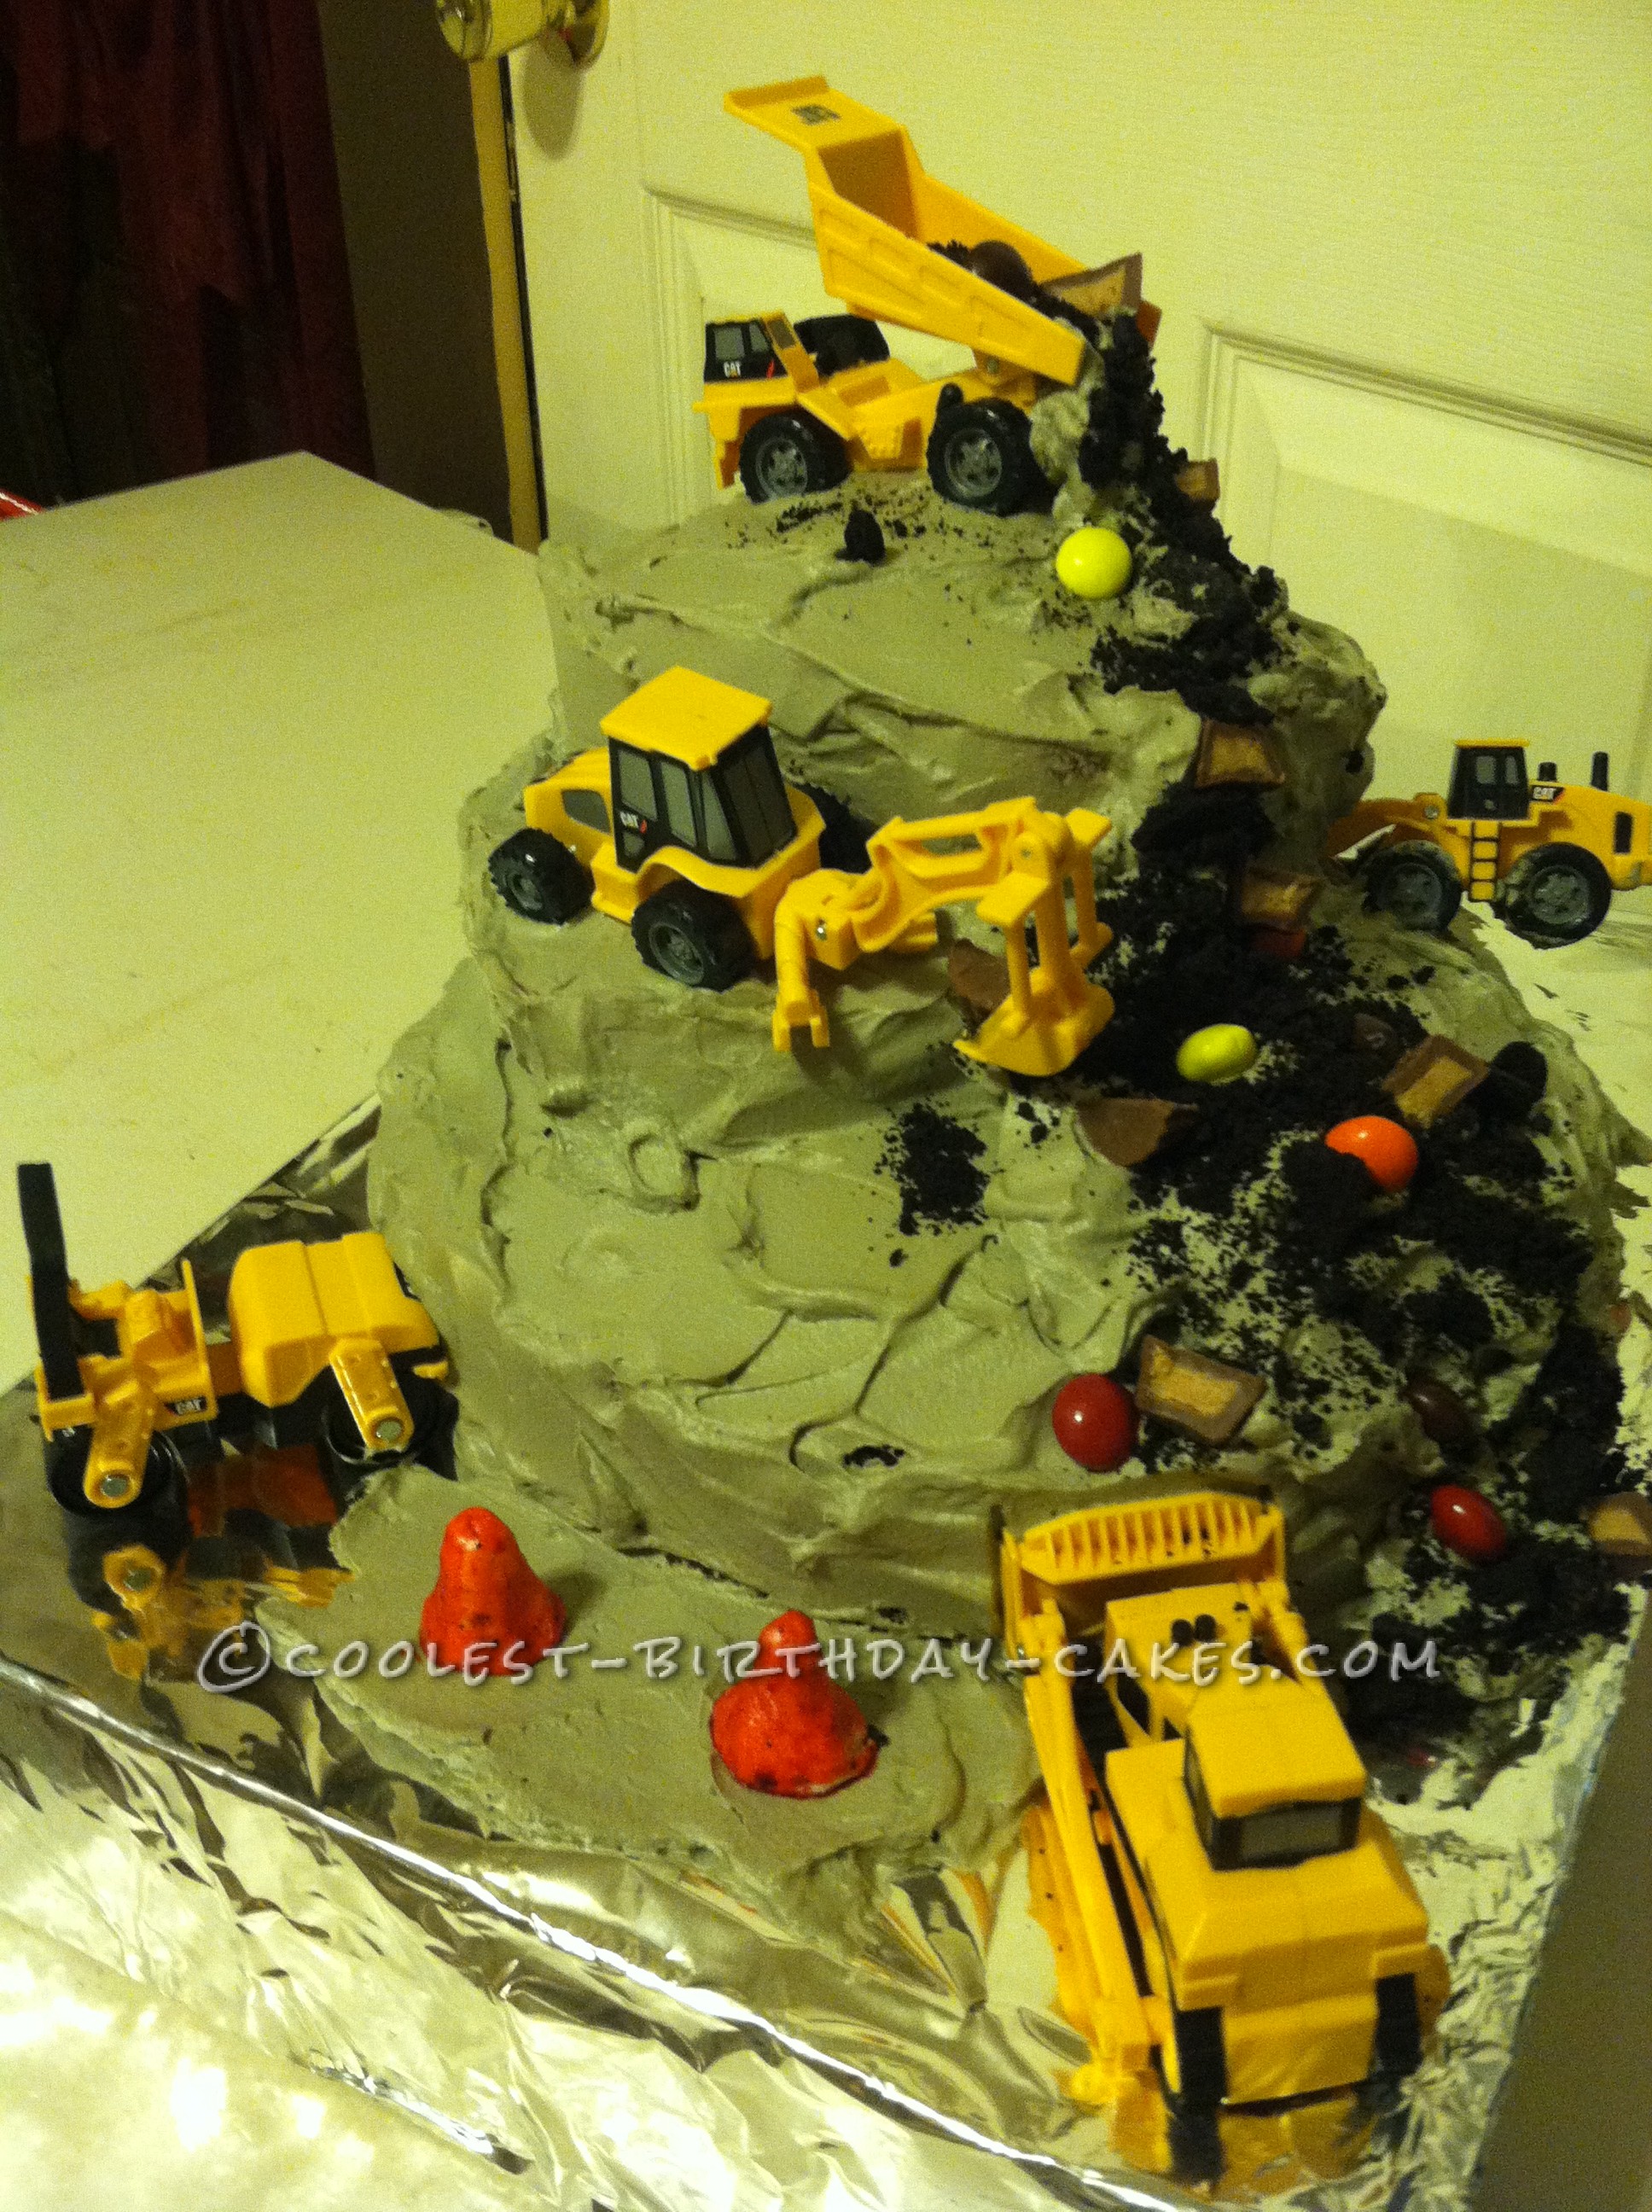 Coolest Construction Zone Cake